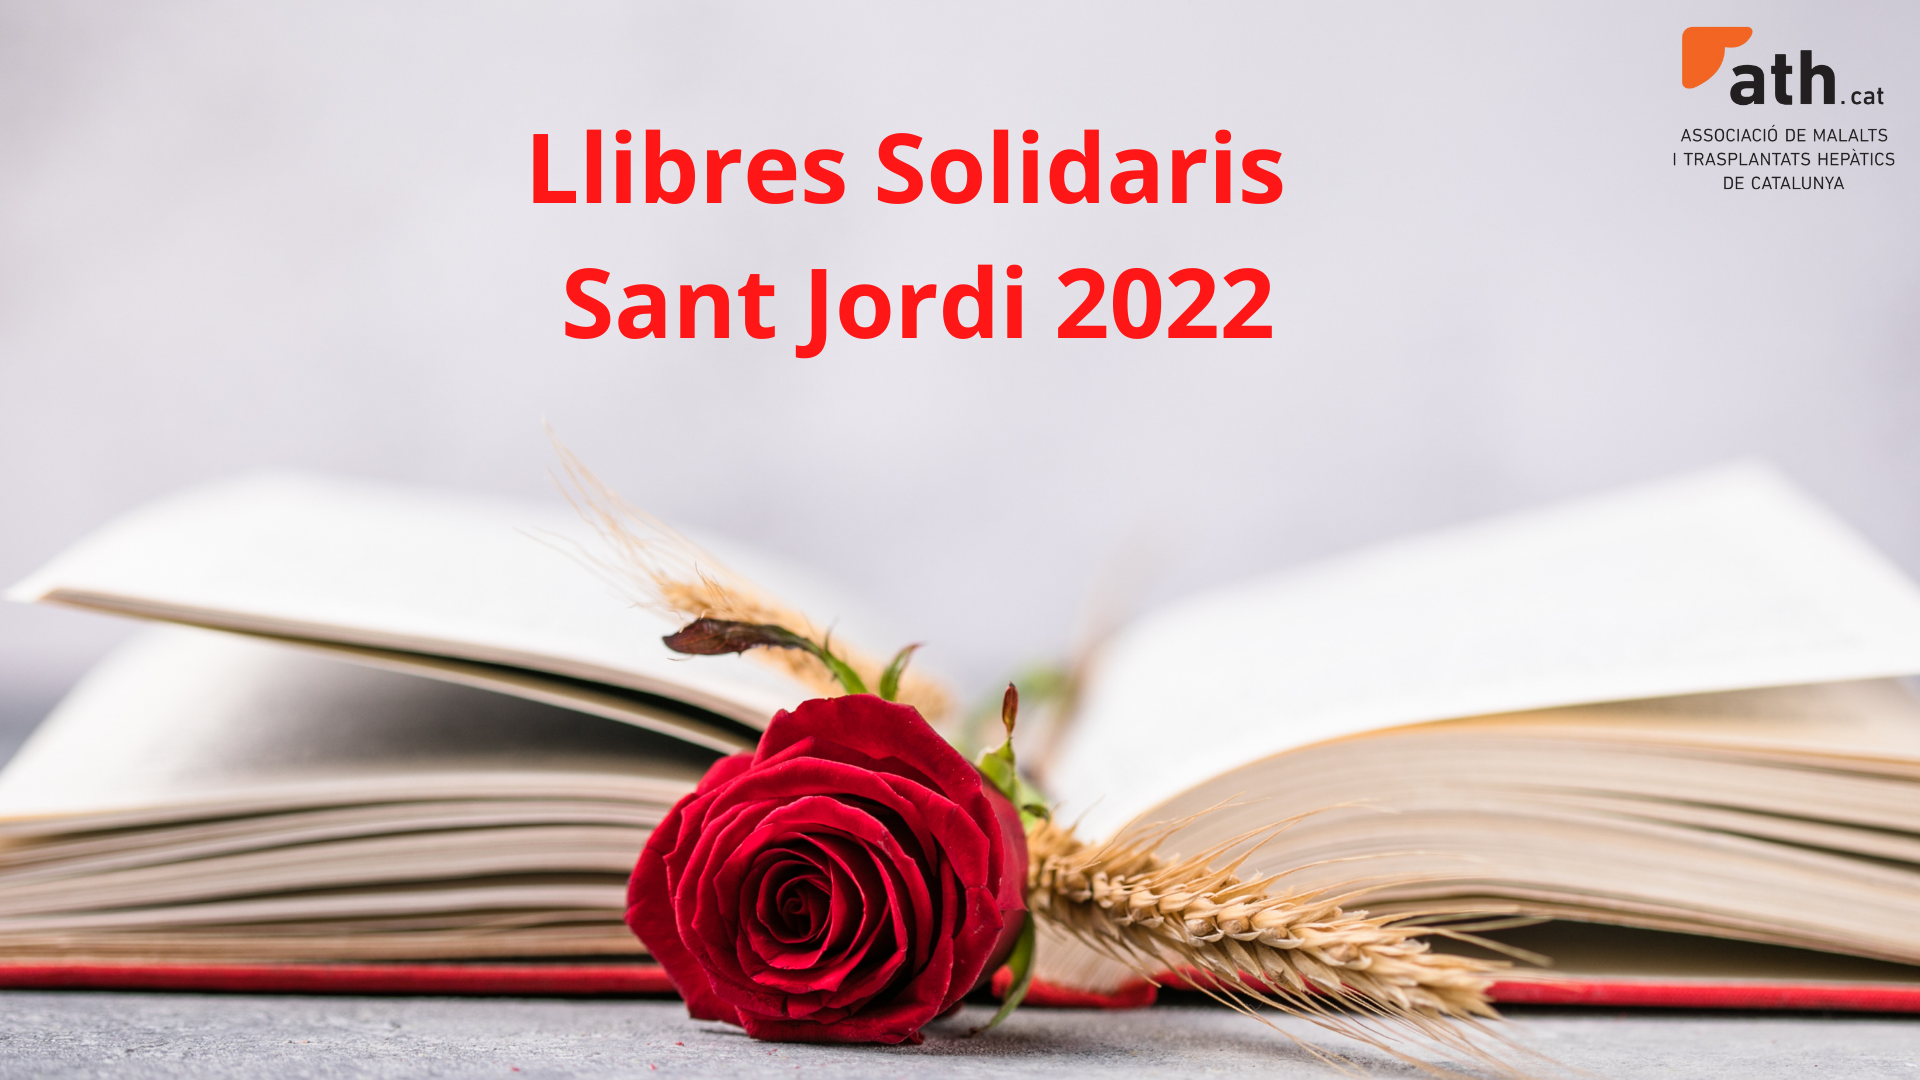 Sant Jordi 2022